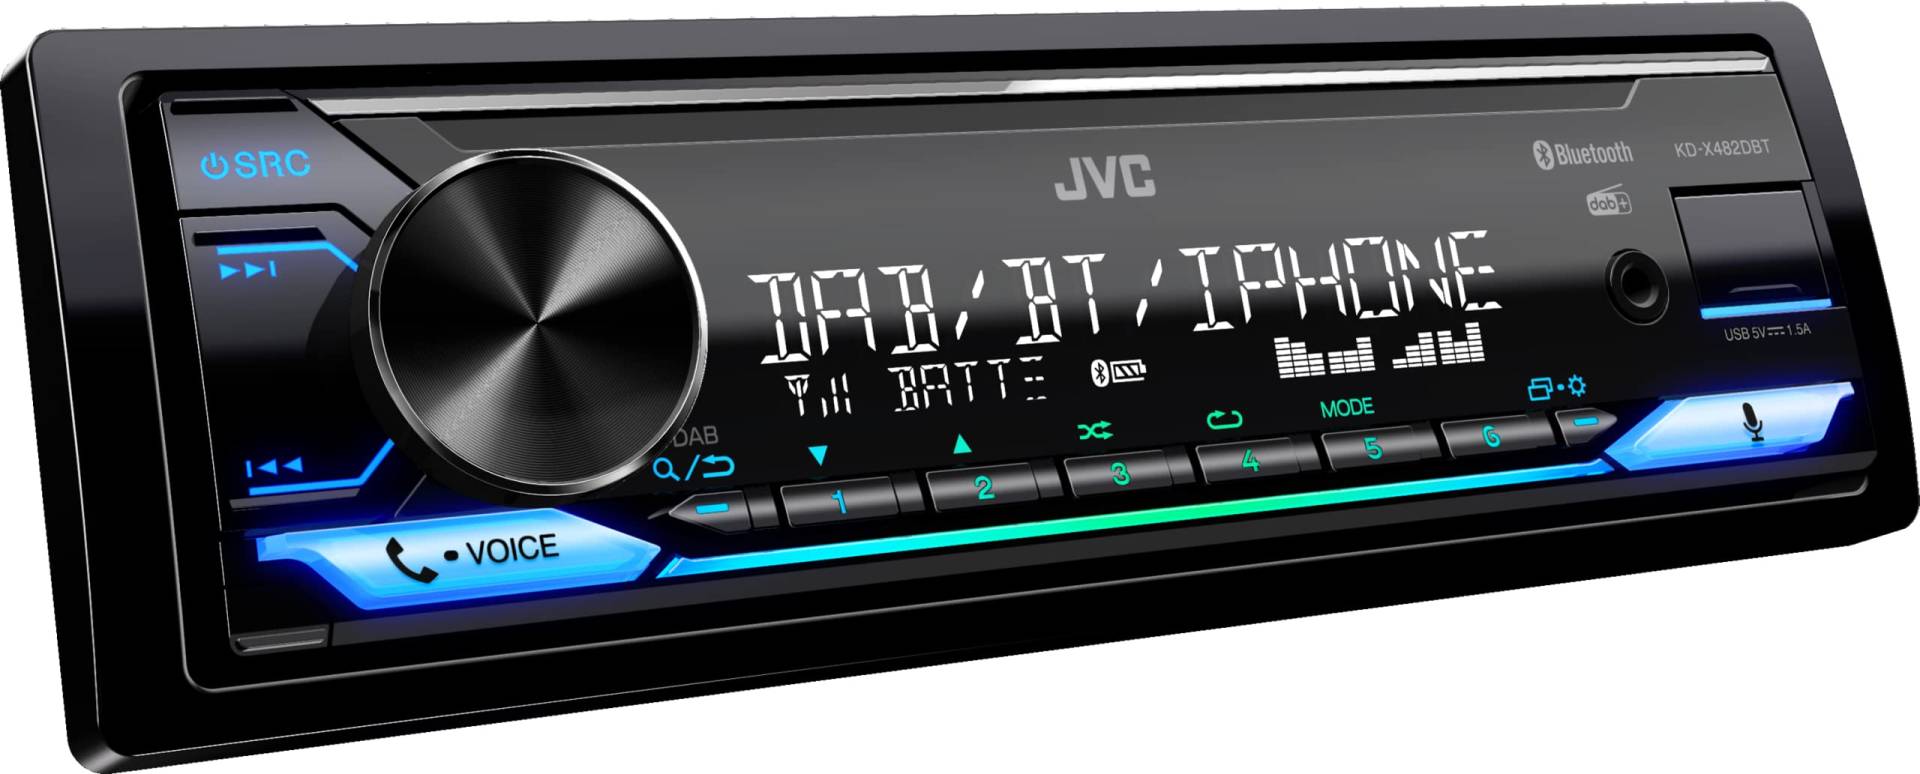 JVC KD-X482DBT USB-Autoradio mit DAB+ & Bluetooth Freisprecheinrichtung (USB, AUX-In, 3 x Pre-Out 2, 5V, Amazon Alexa, Soundprozessor, 4x50 W, VAR. Beleuchtung), Schwarz von JVC